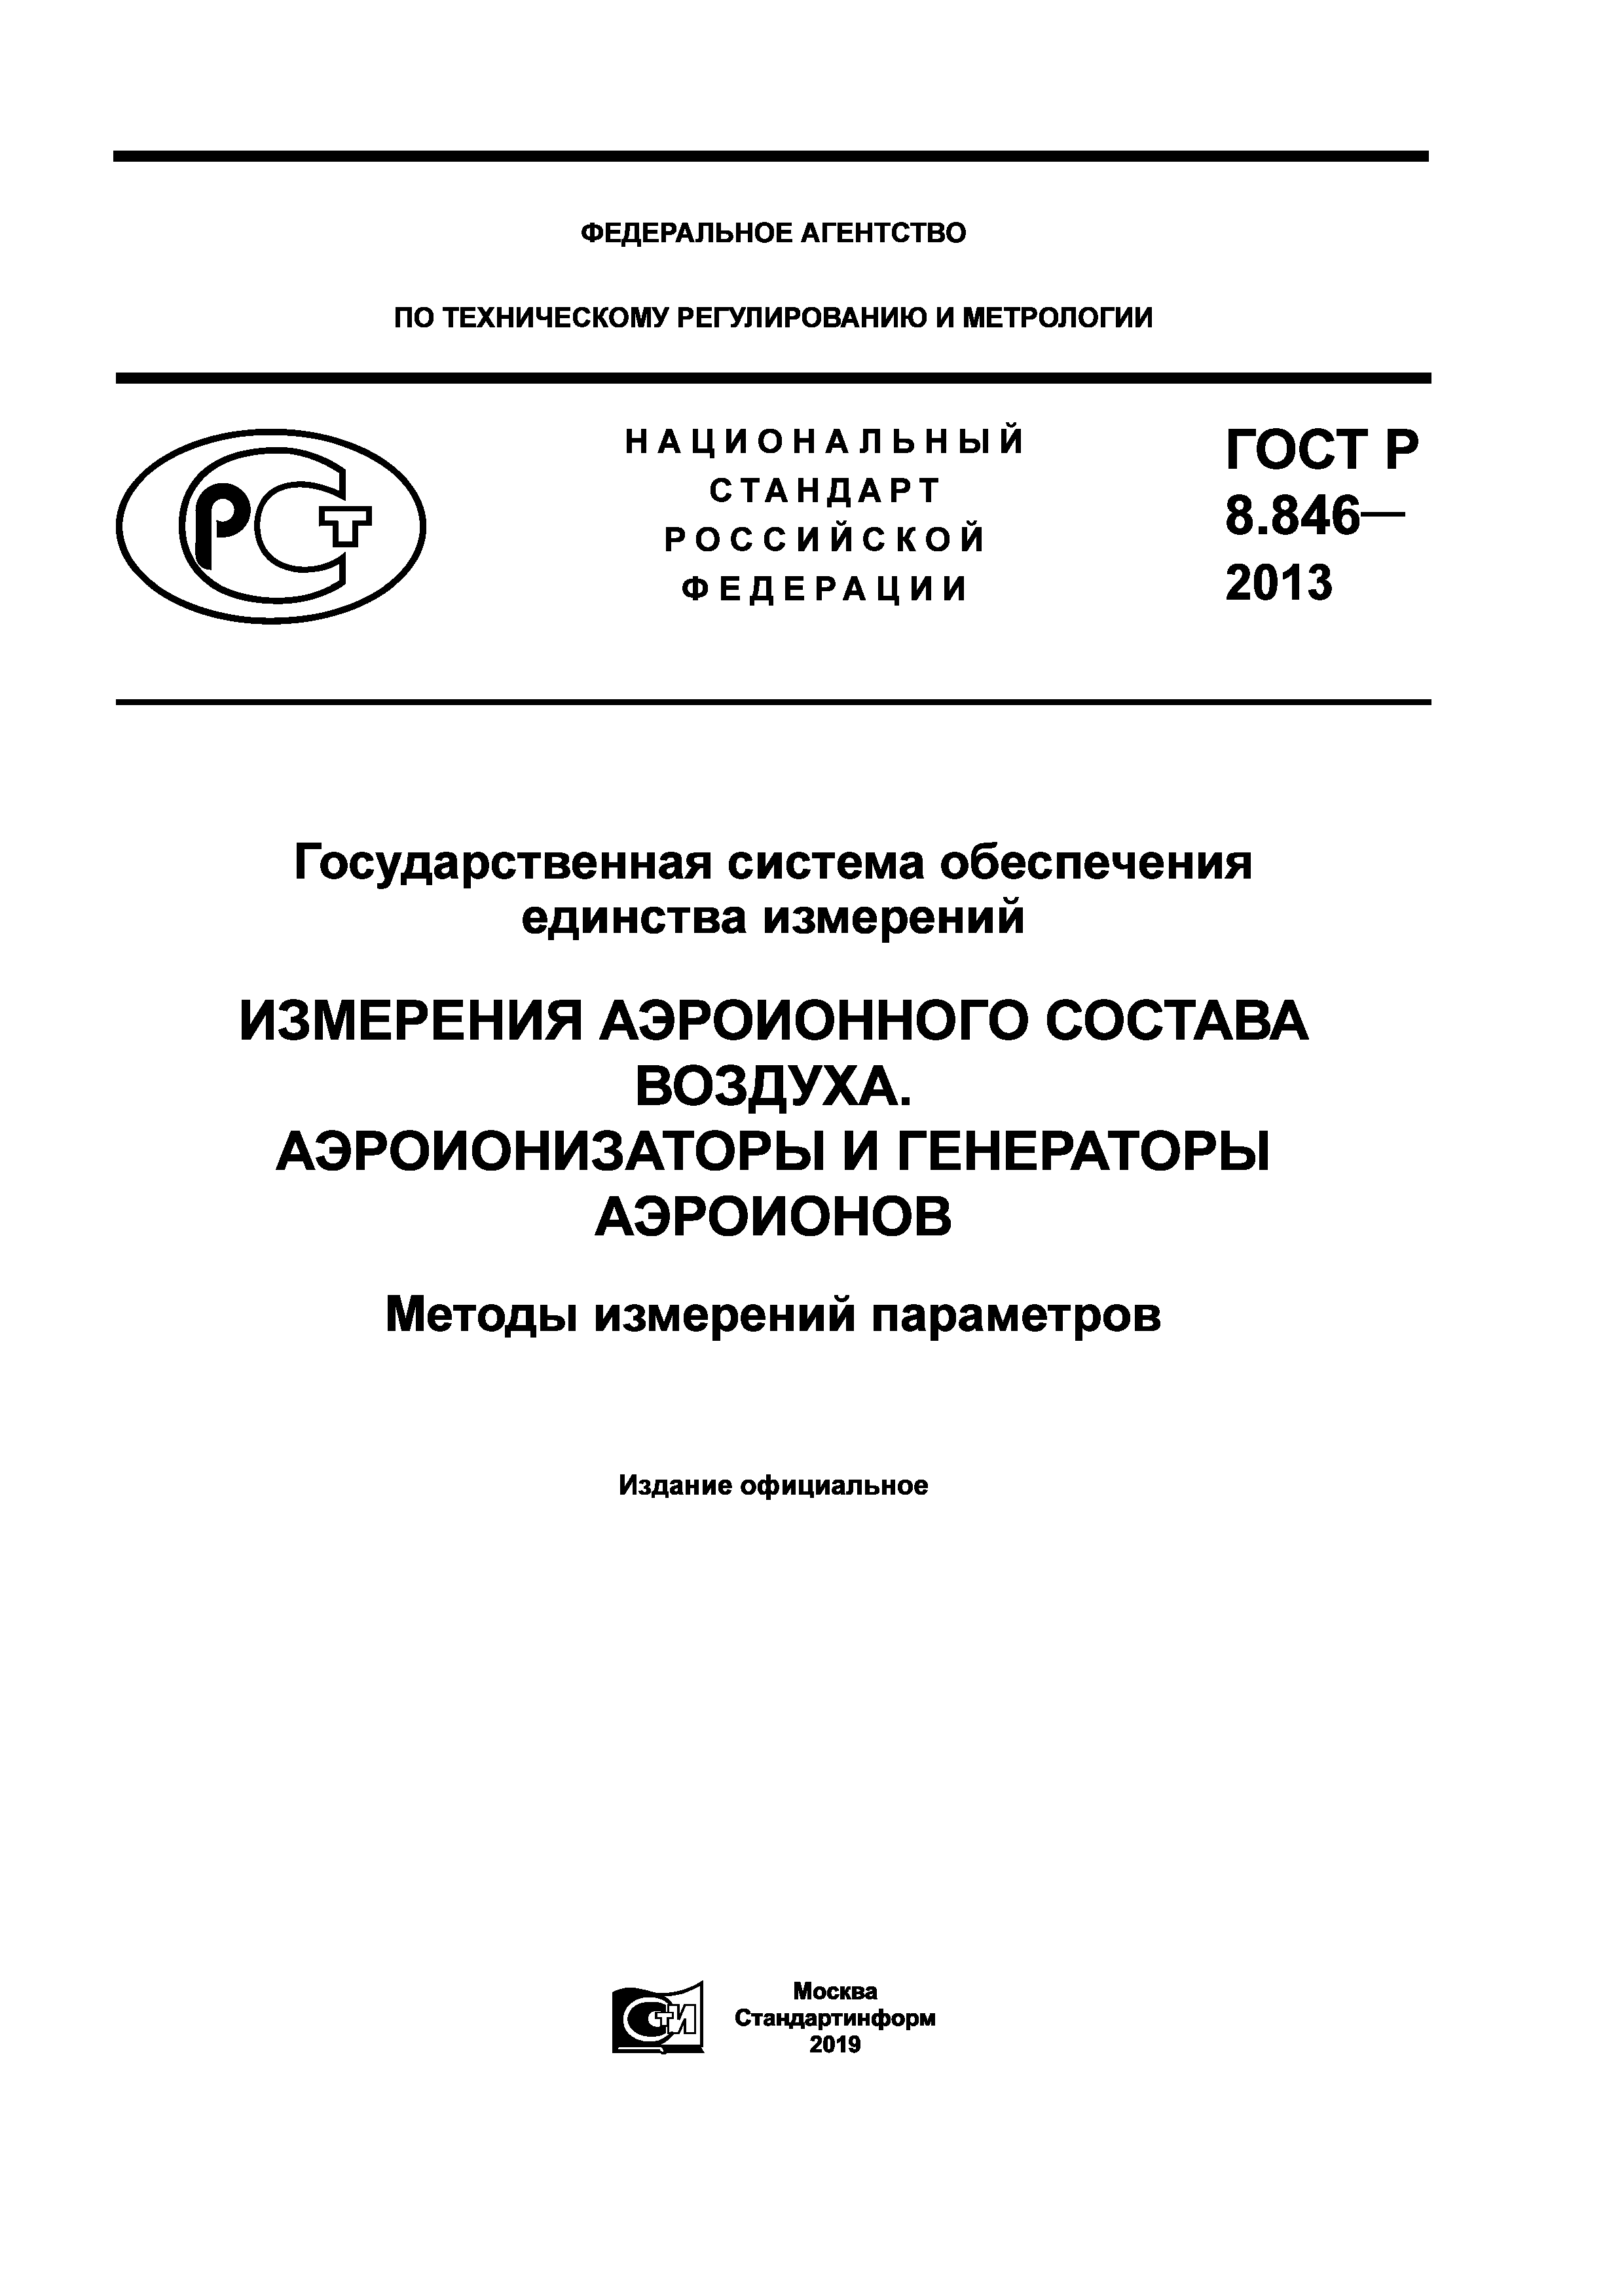 ГОСТ Р 8.846-2013